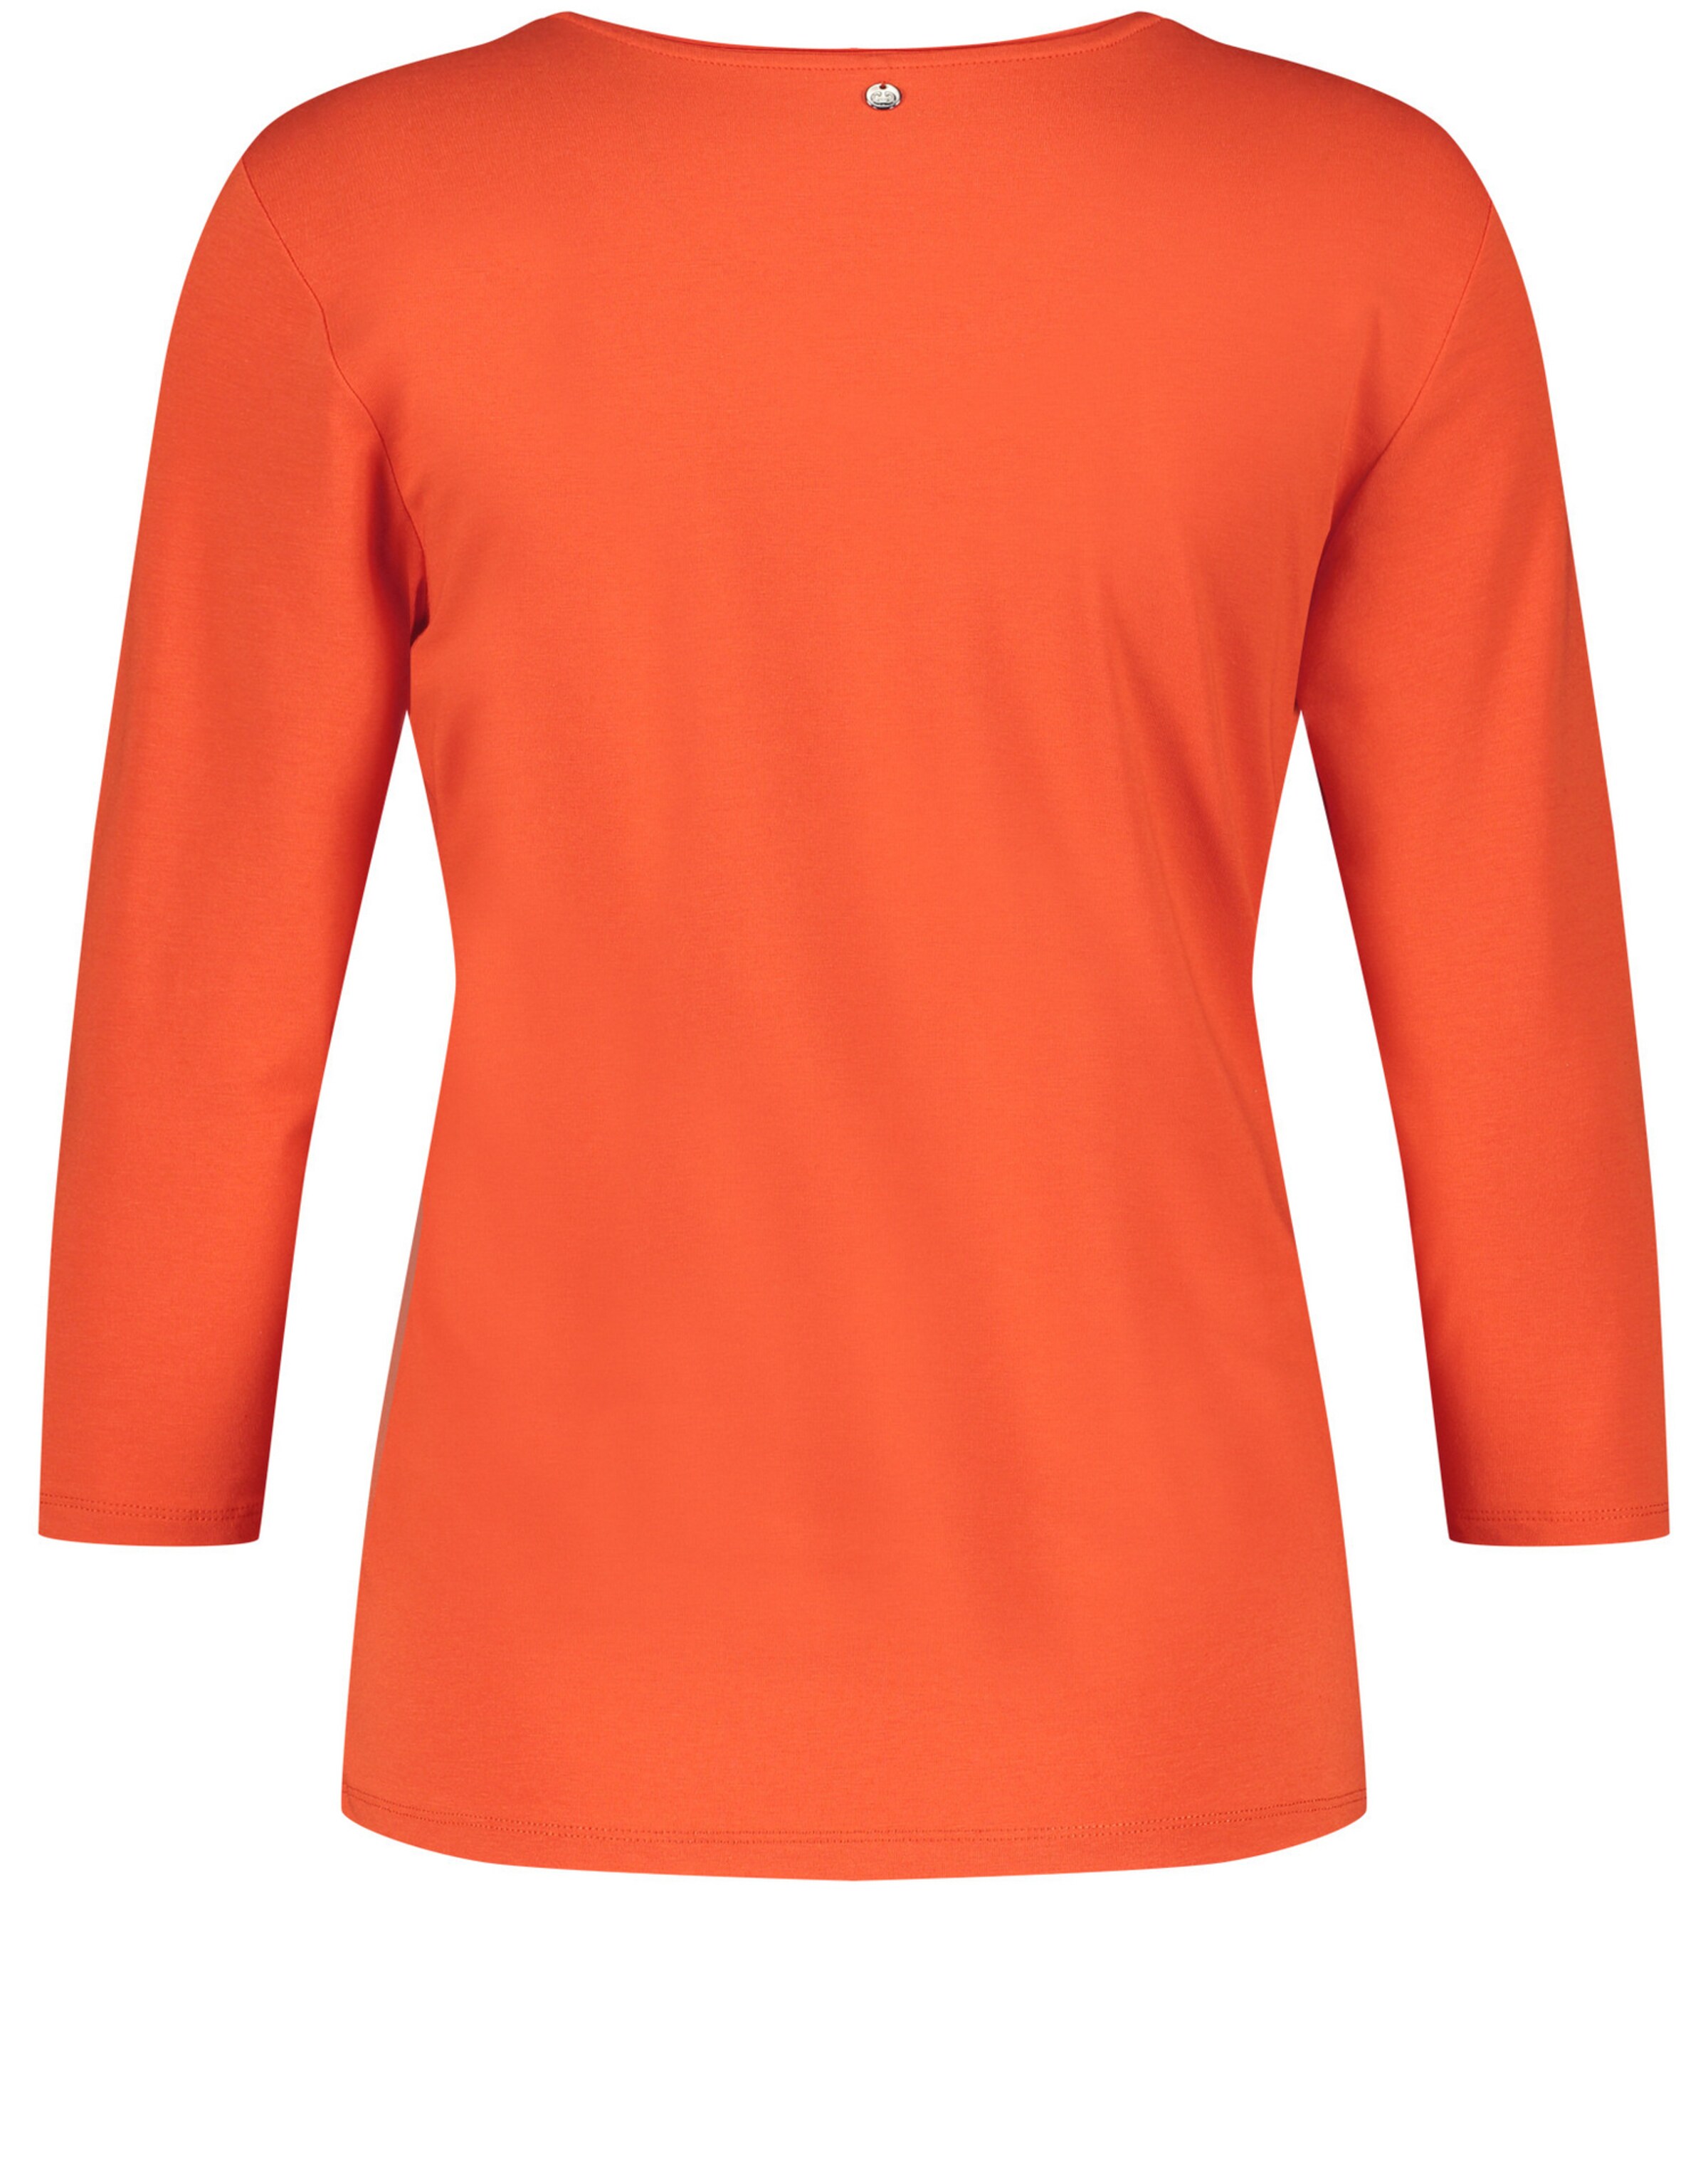 GERRY WEBER Shirt in Orange 